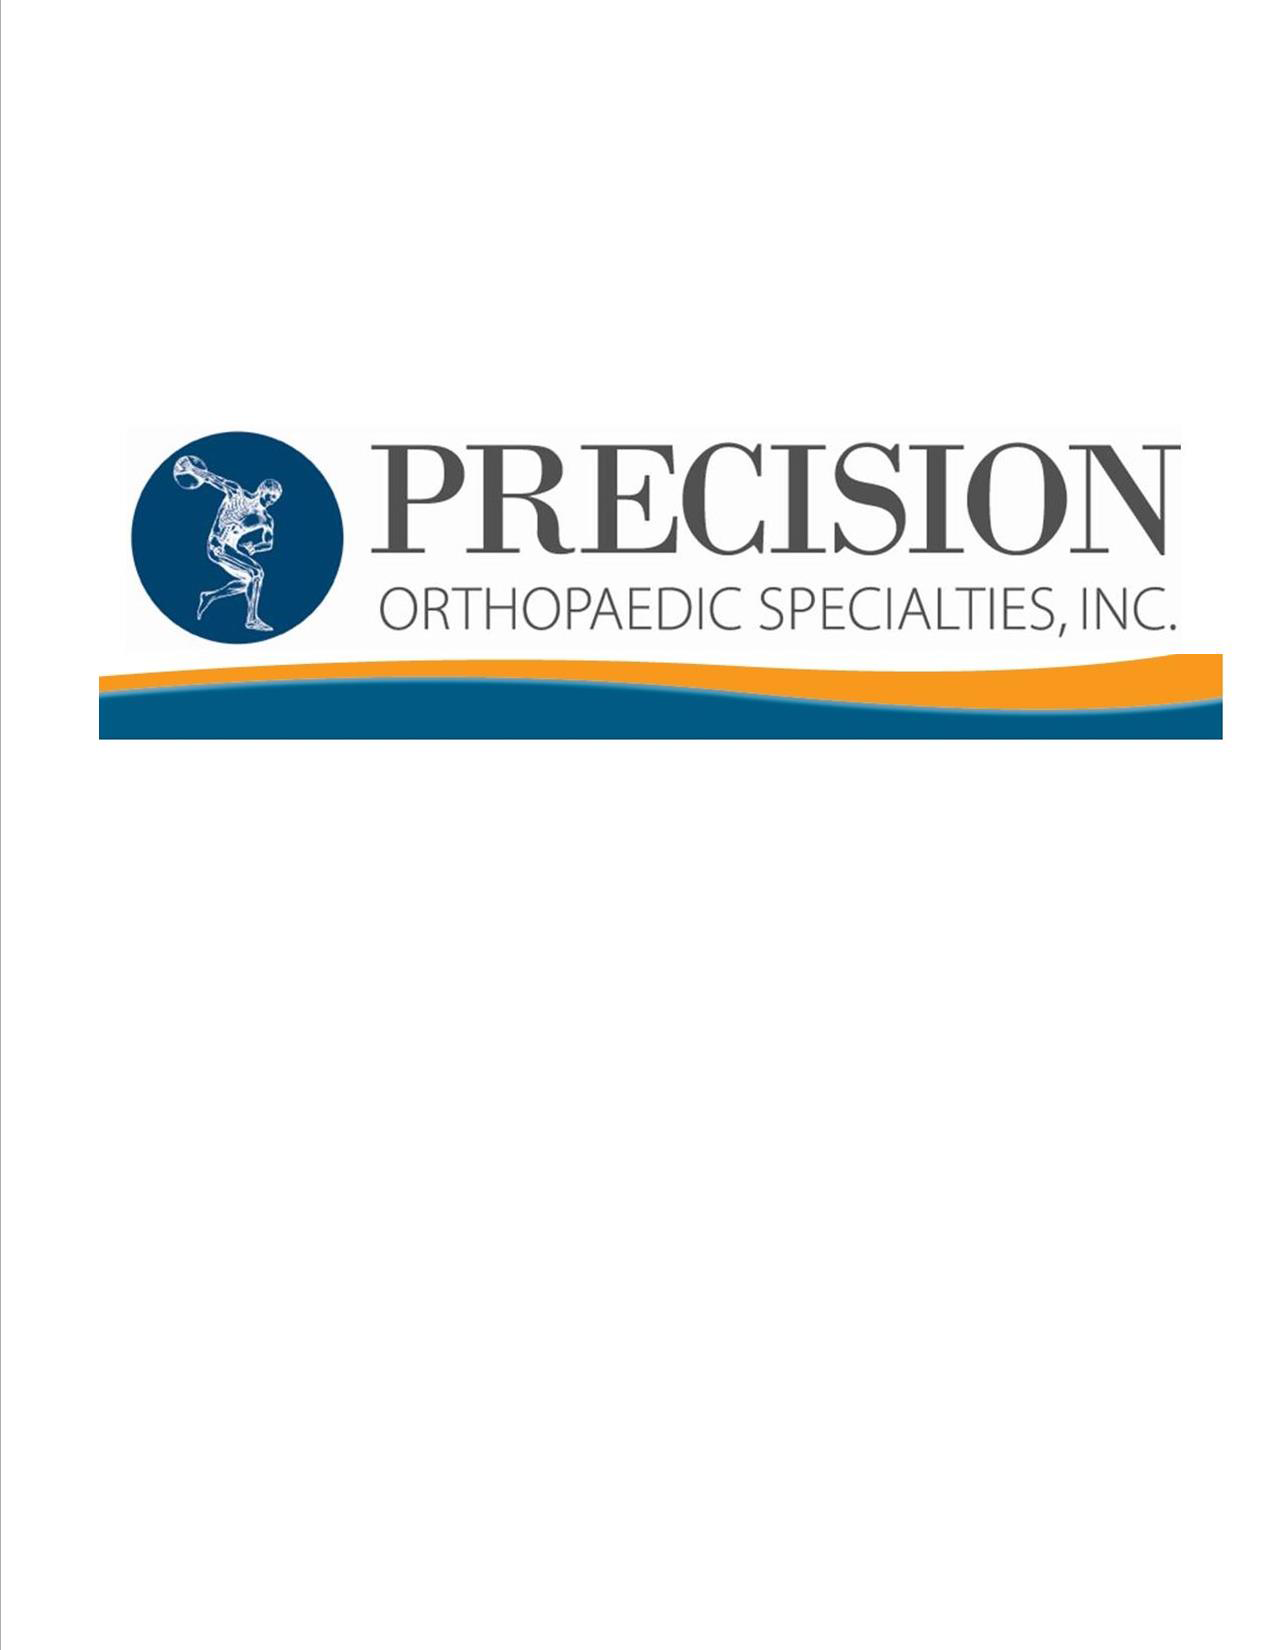 Precision Orthopaedic Specialties Company Logo